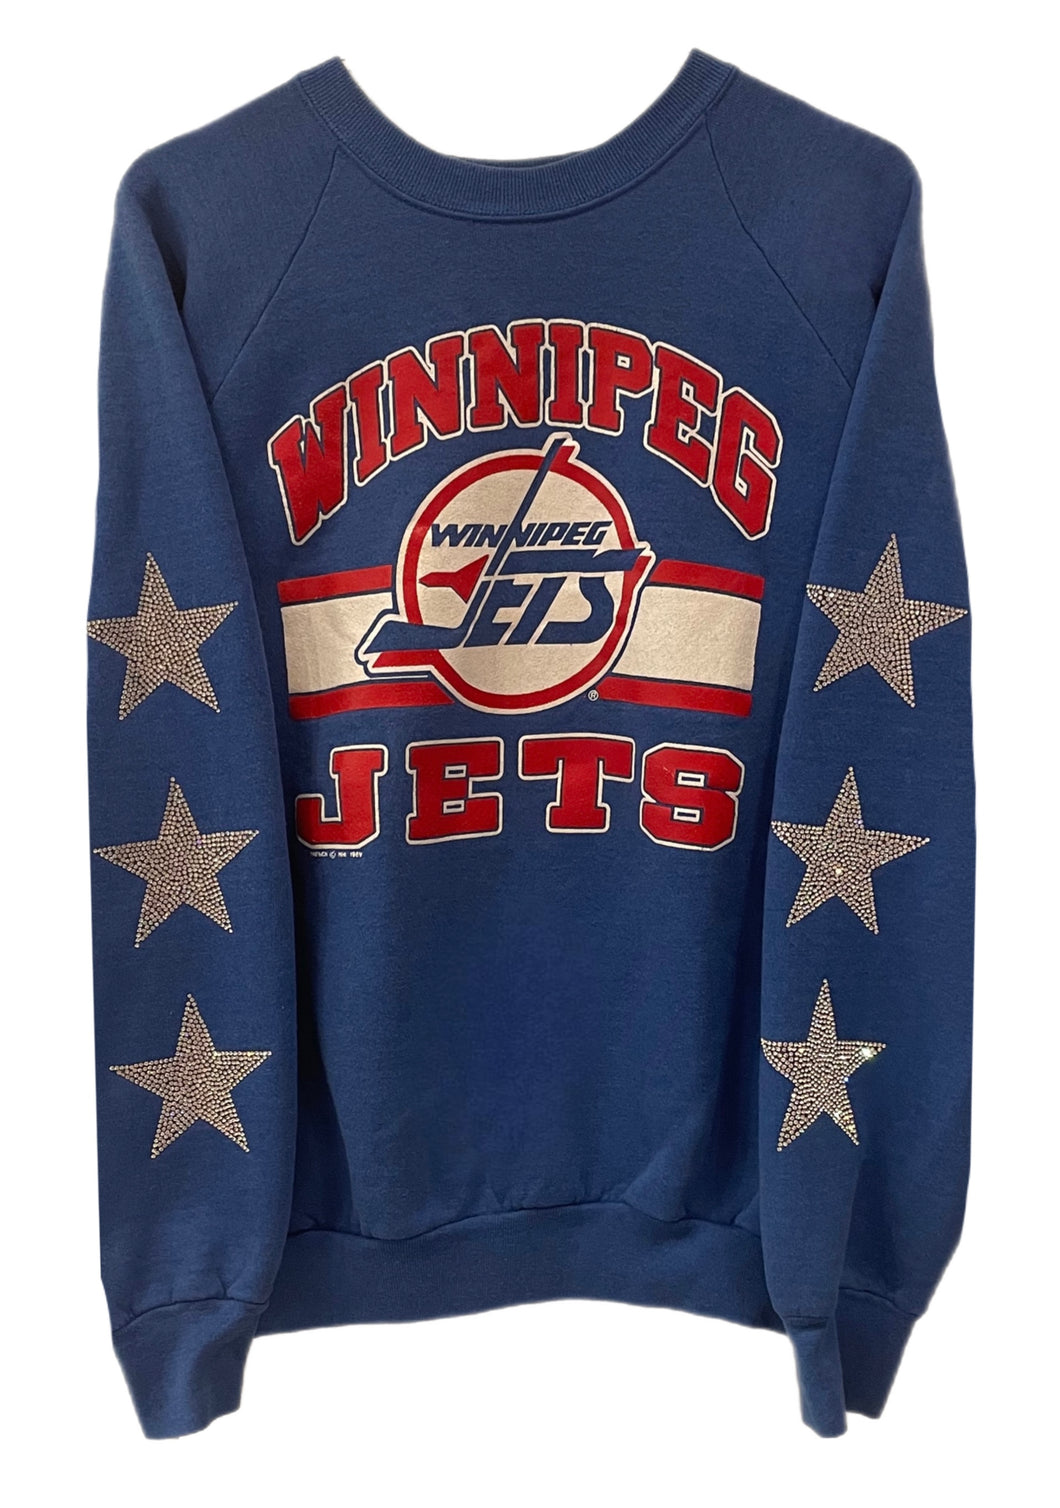 Winnipeg Jets, NHL “Rare Find” One of a KIND Vintage Sweatshirt with Three Crystal Star Design